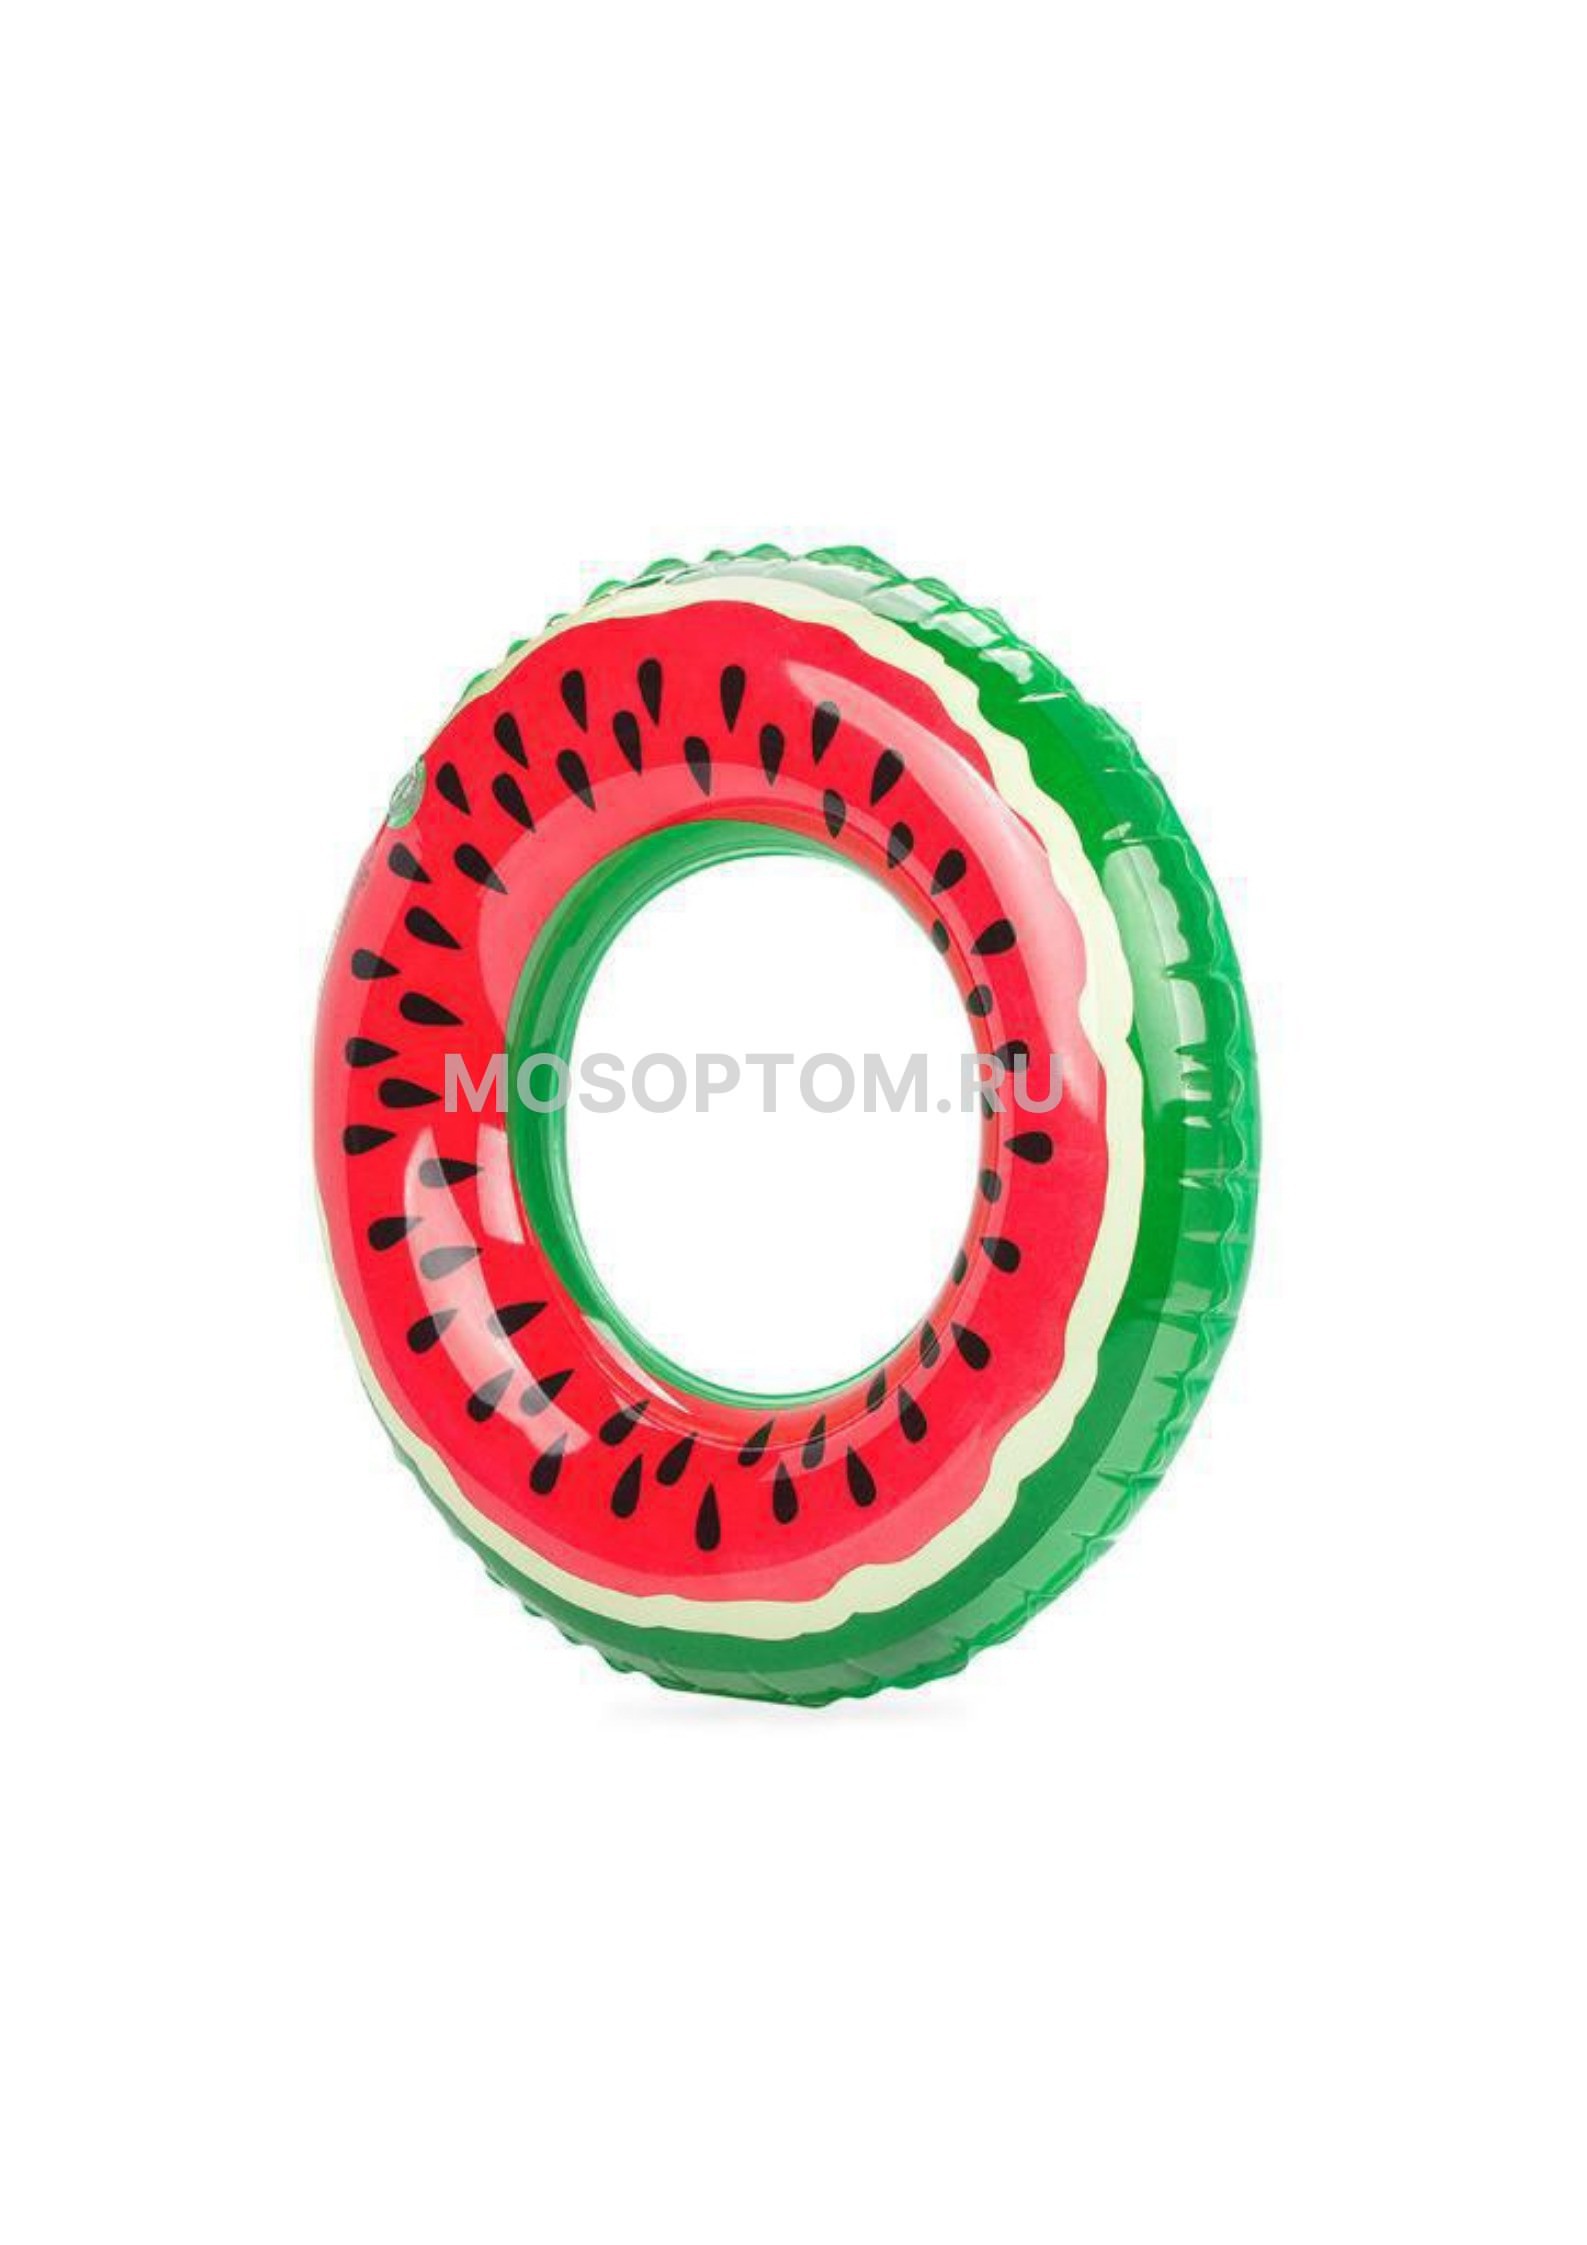 Надувной круг Арбуз Watermelon 70см оптом - Фото №2